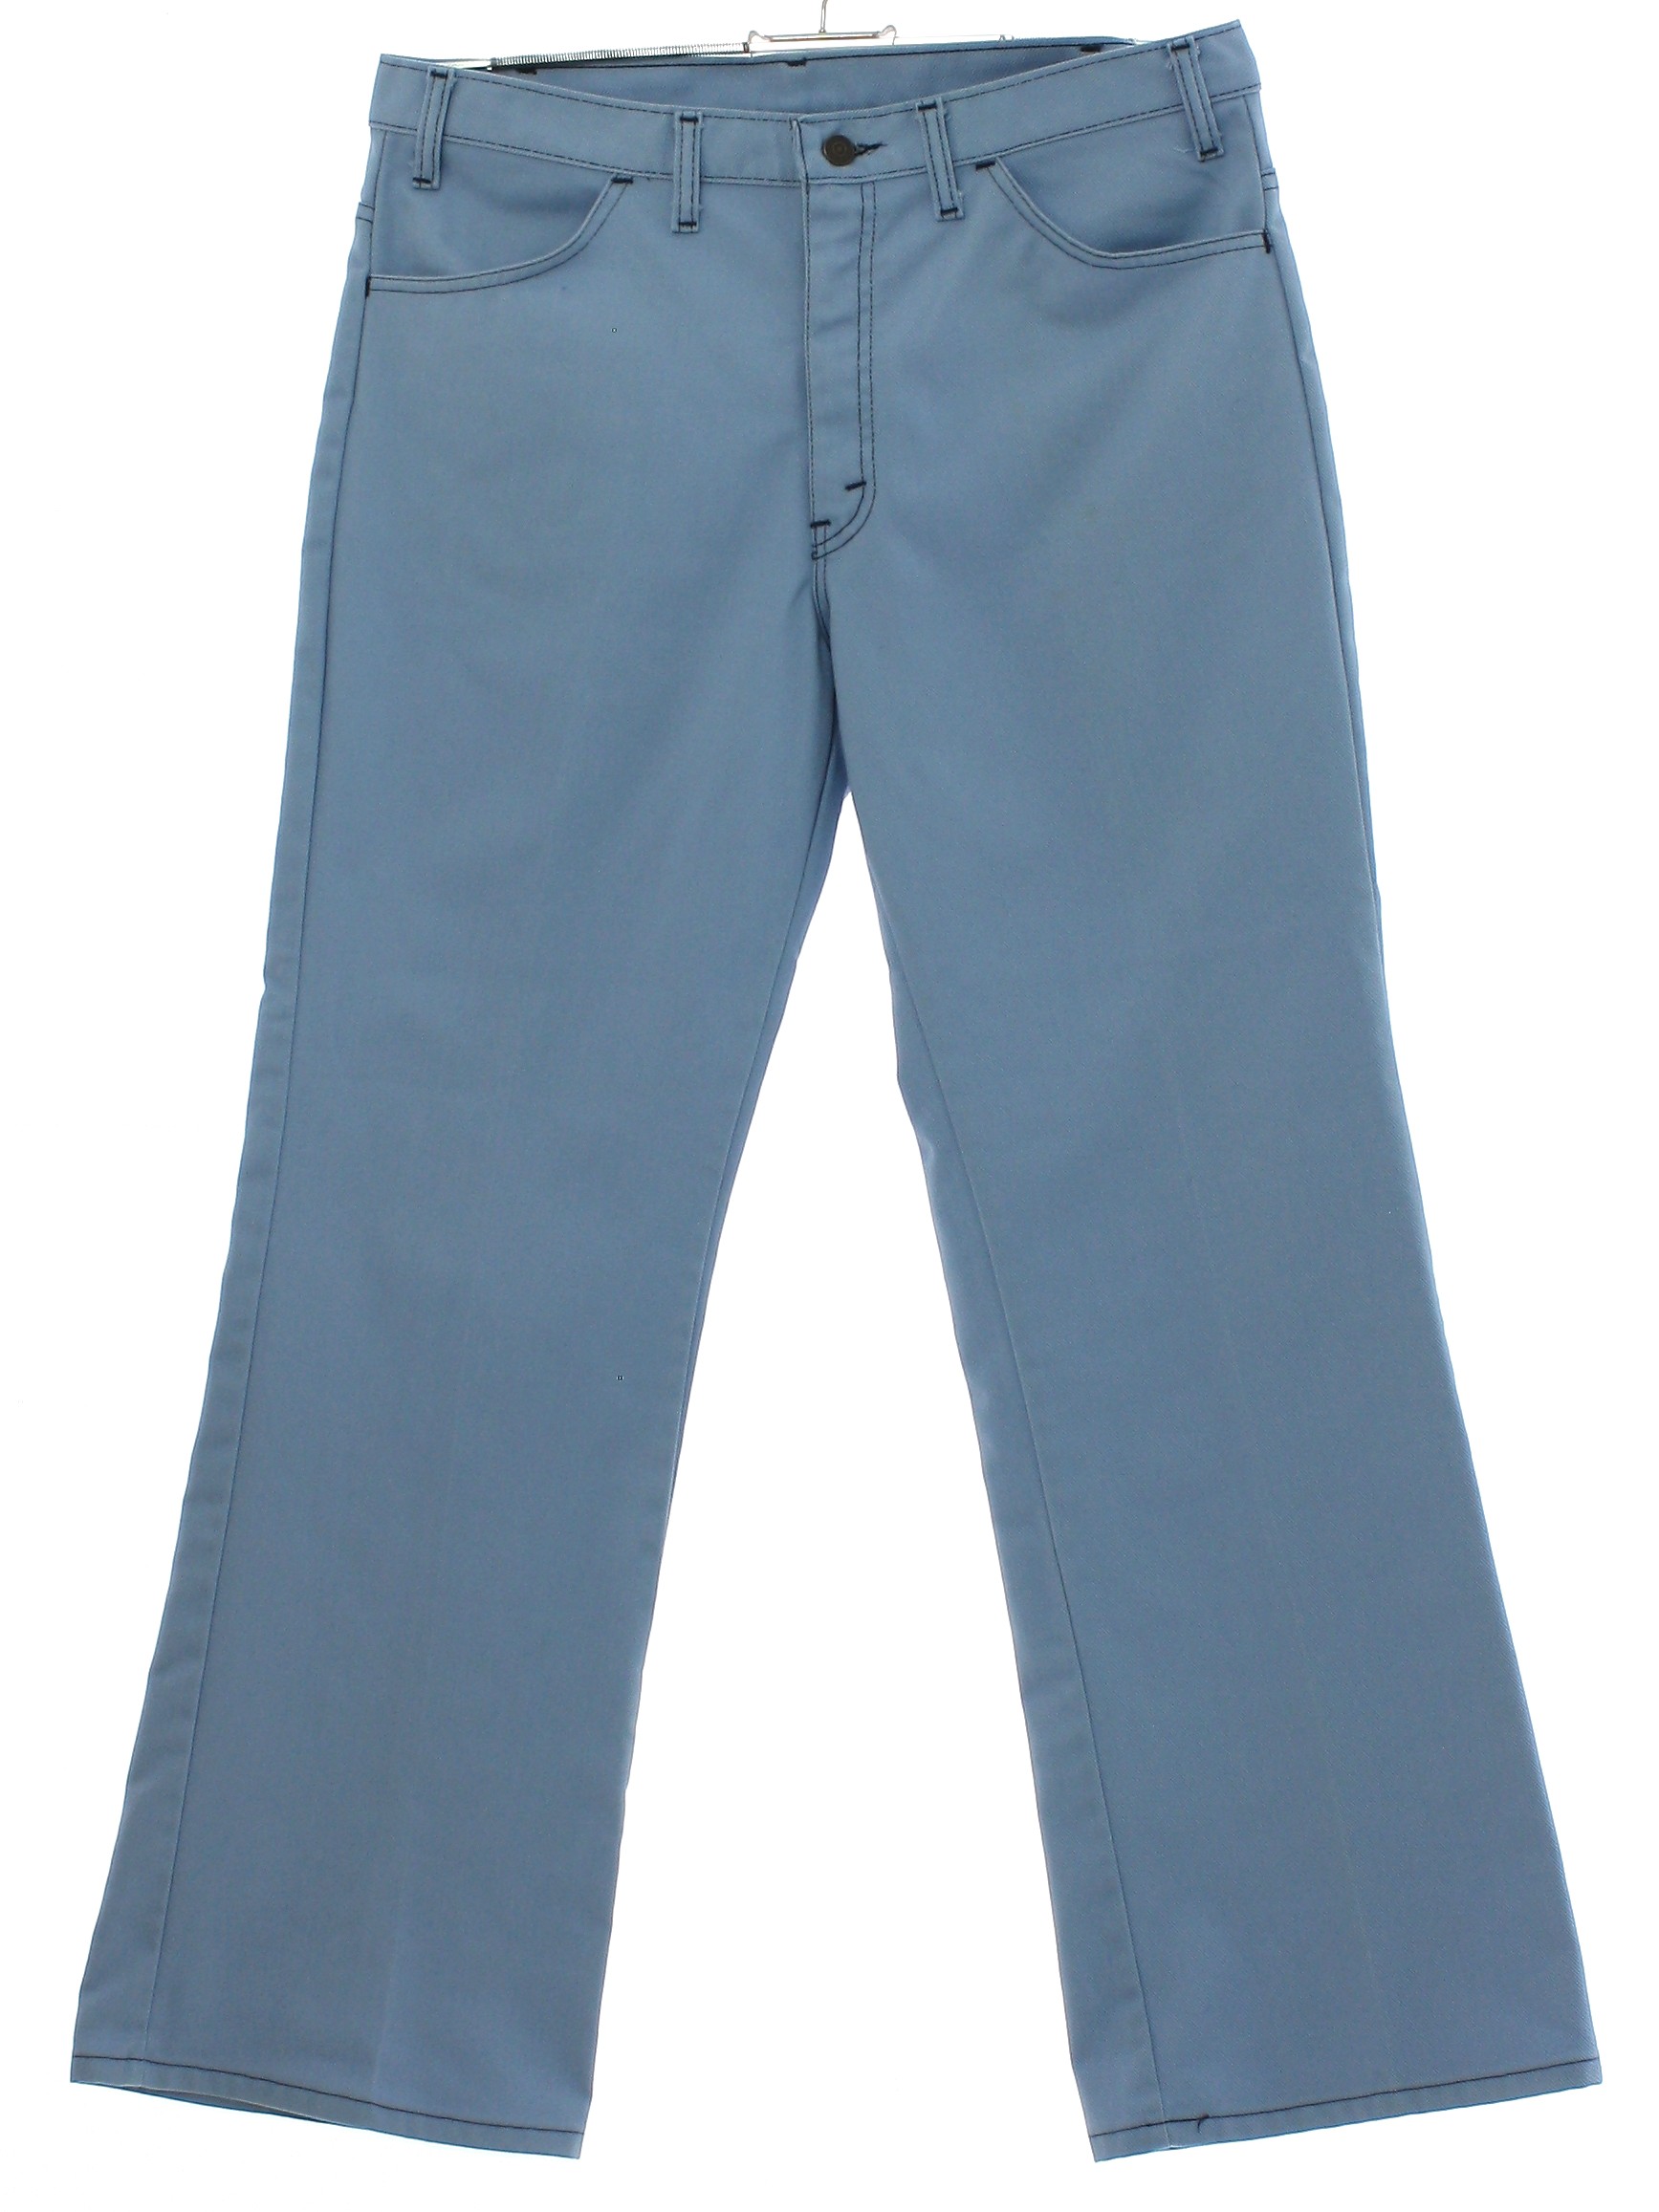 Montgomery Ward Seventies Vintage Flared Pants / Flares: 70s ...